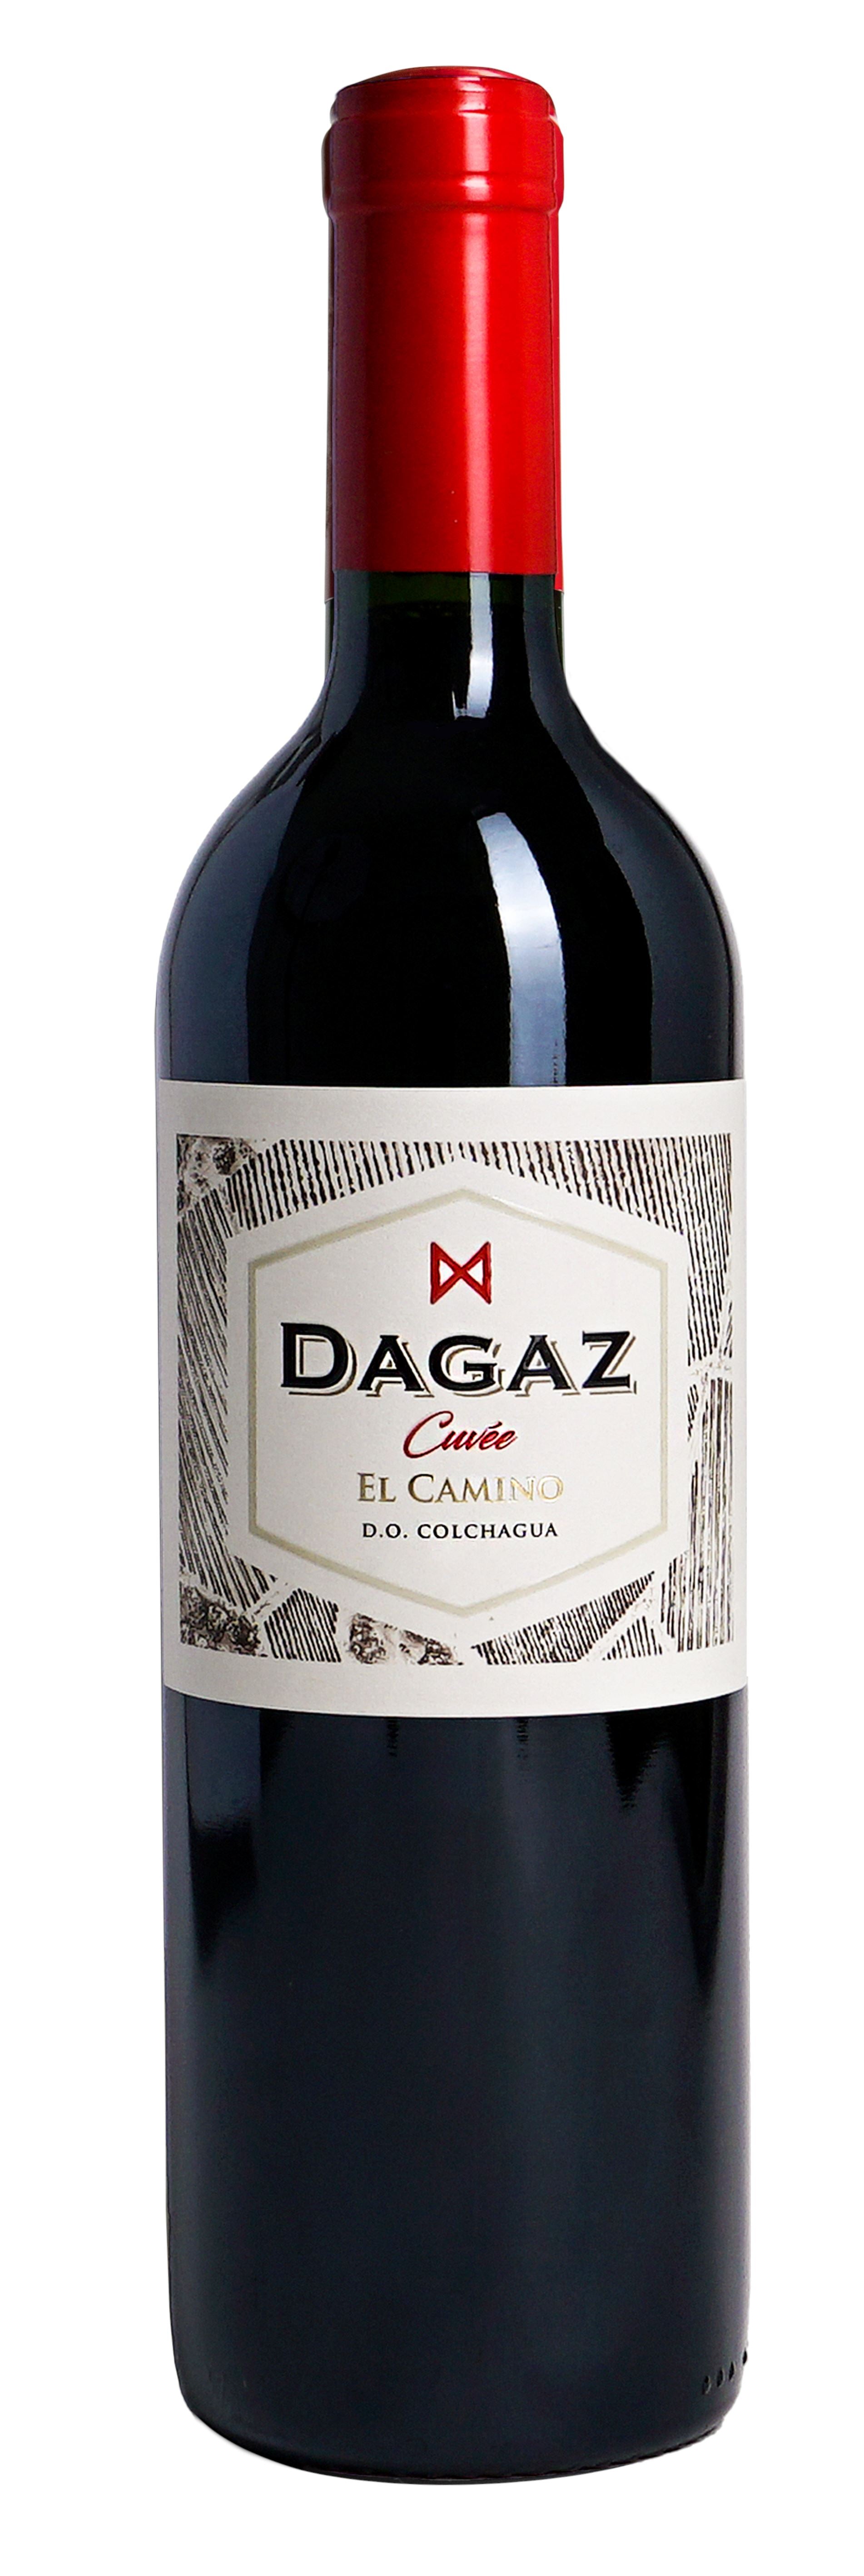 Dagaz, Cuvée El Camino, Colchagua Valley, Chile Wine Bottle Condor Wines 